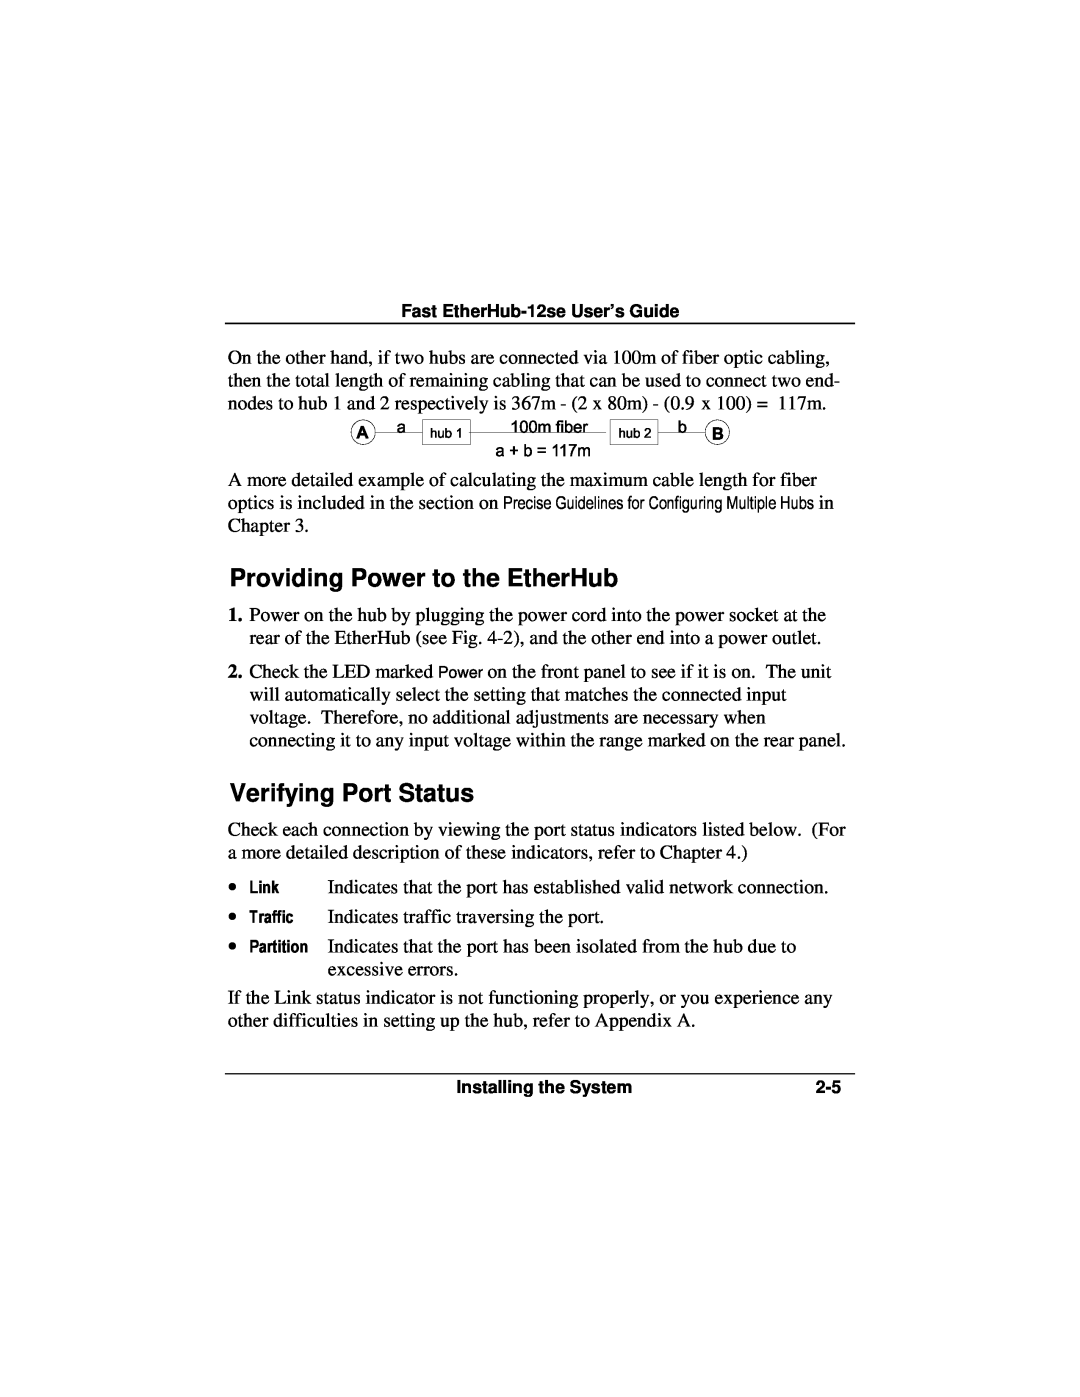 Accton Technology 12se manual Providing Power to the EtherHub, Verifying Port Status 